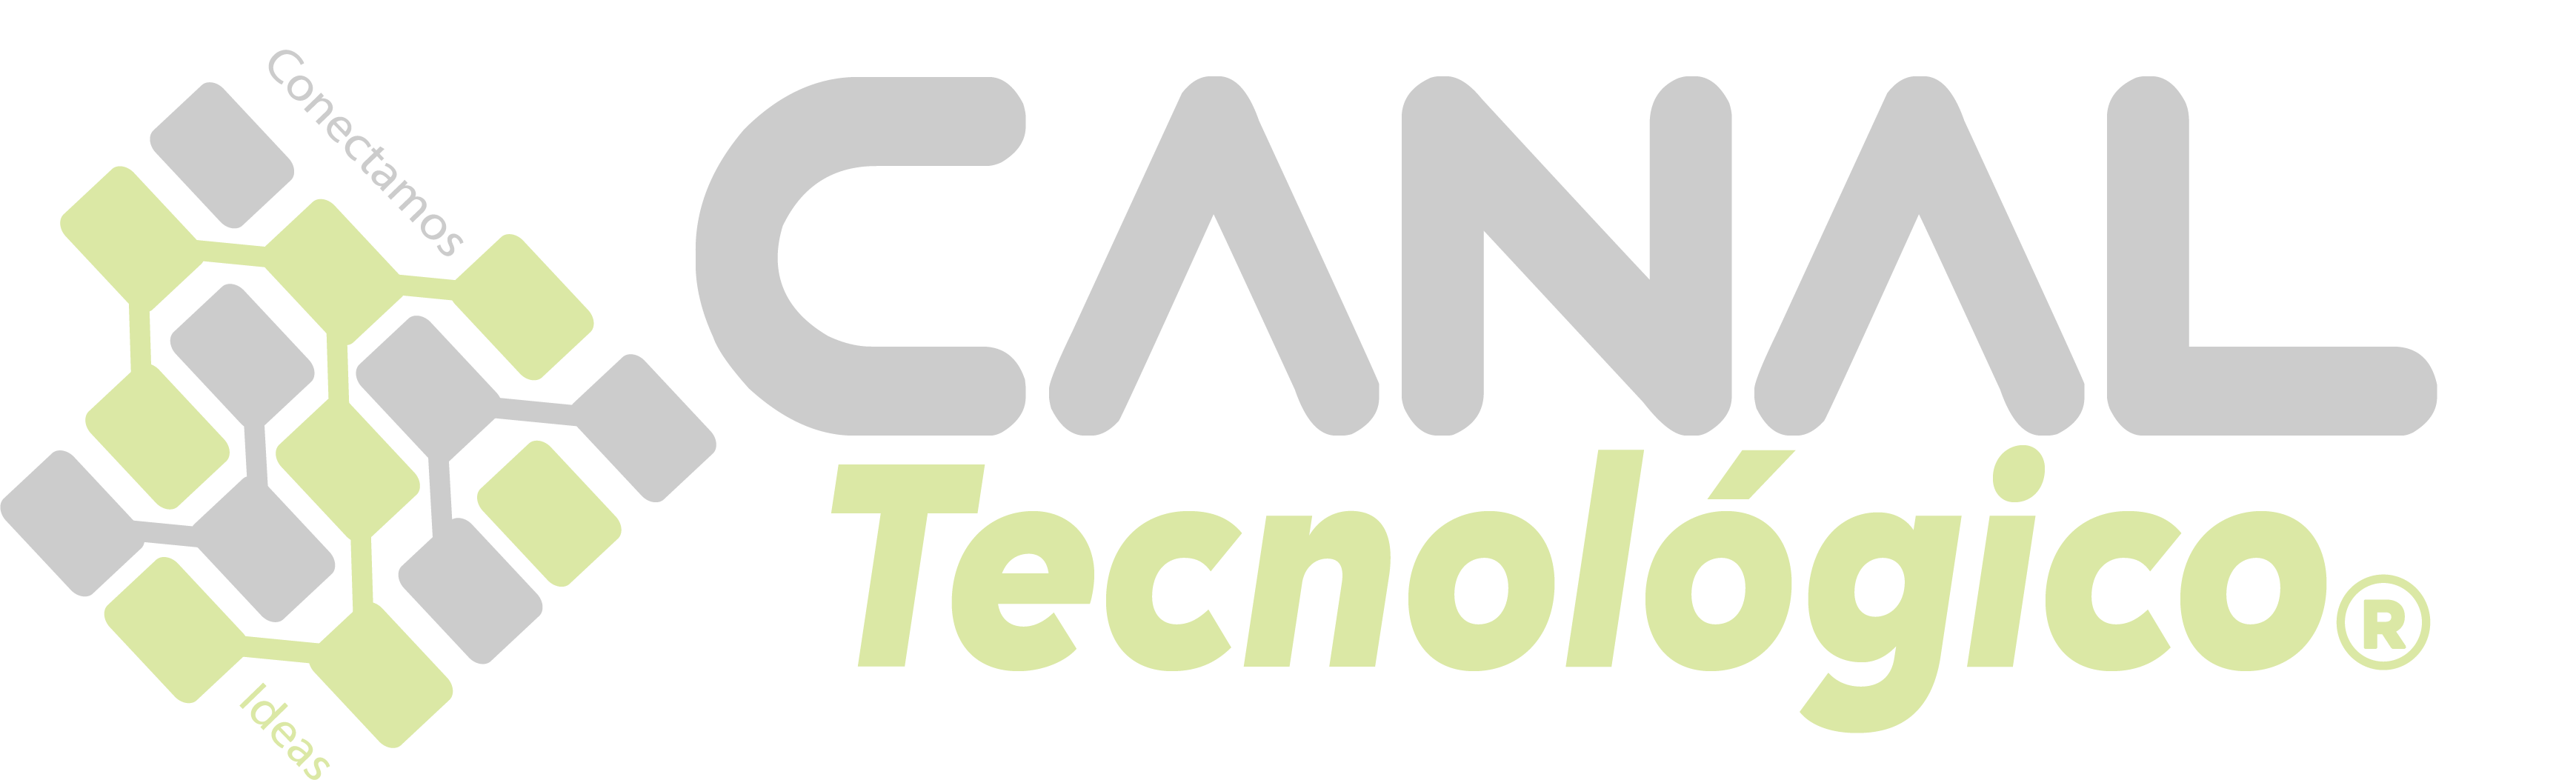 Canal Tecnologico